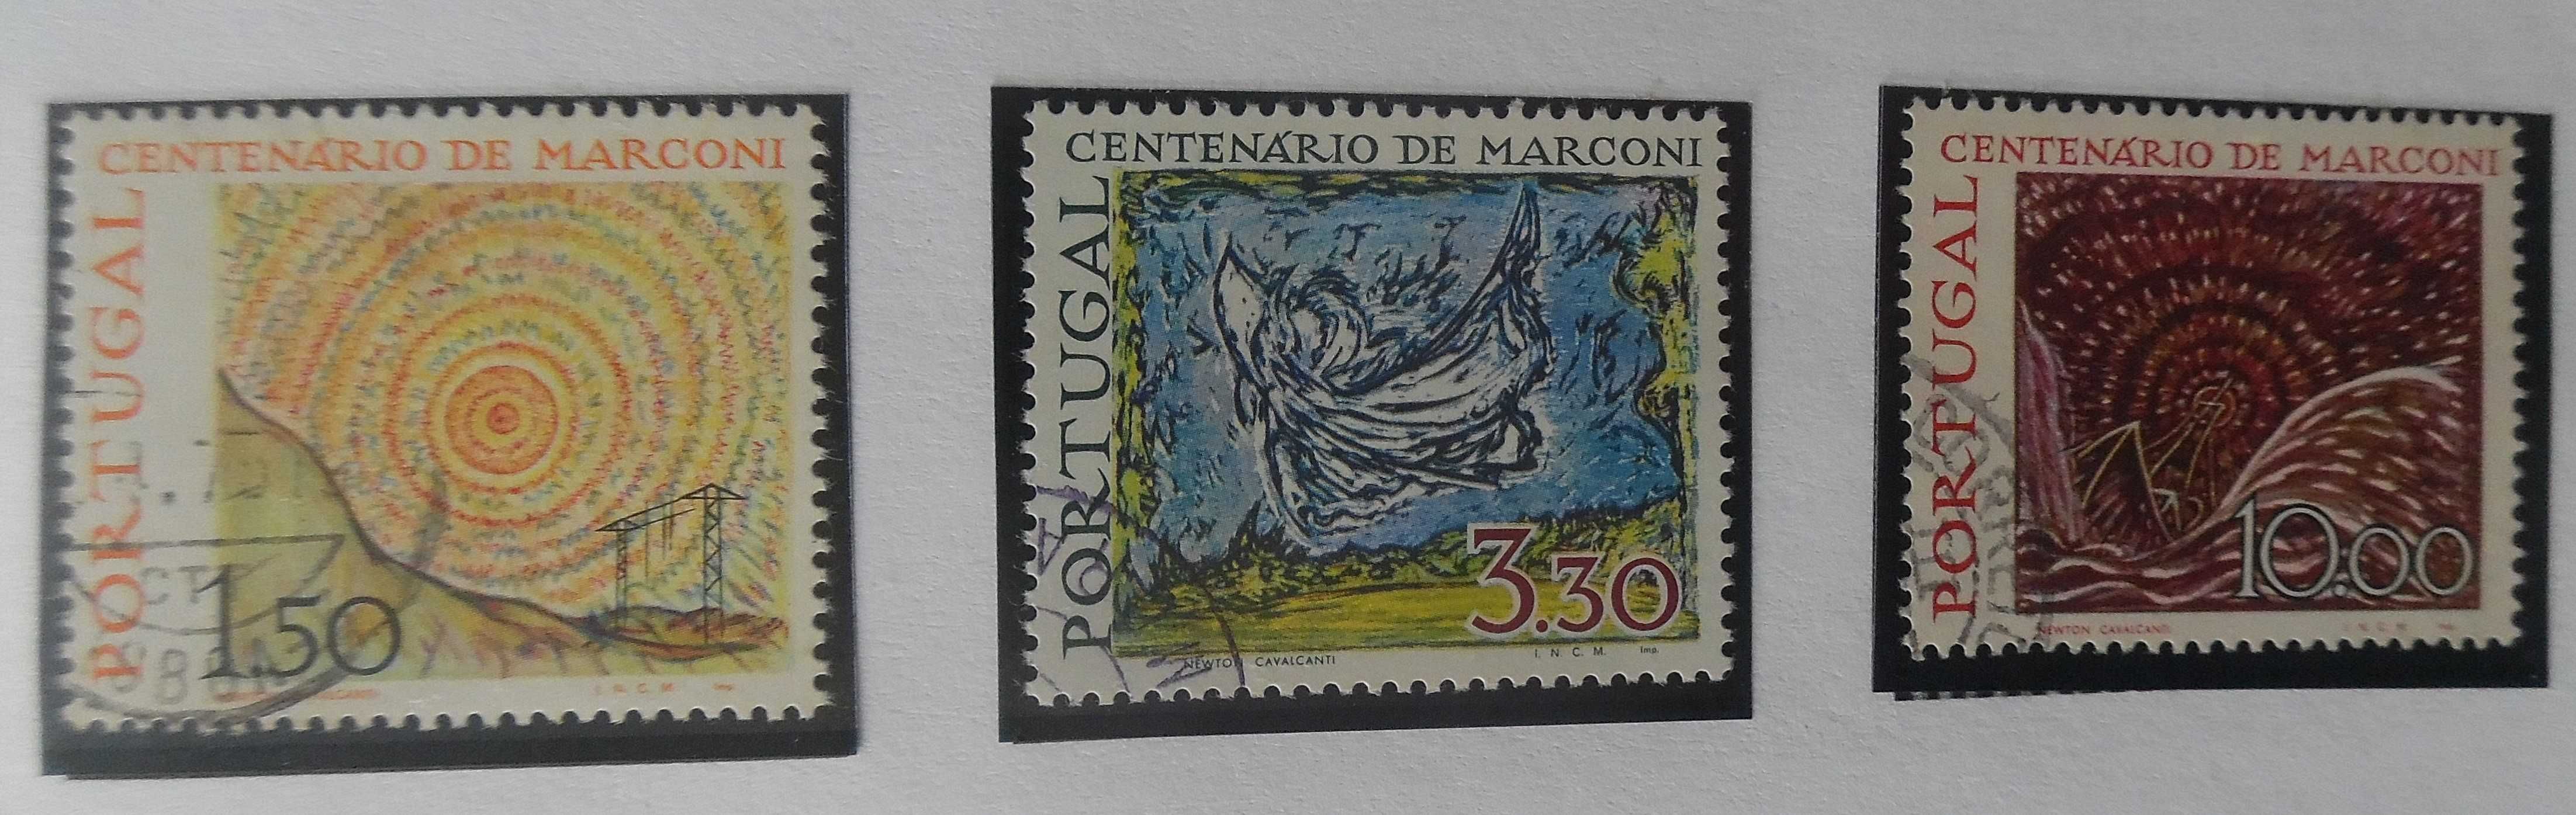 Selos Portugal 1974-Cantenário Marconi Completo